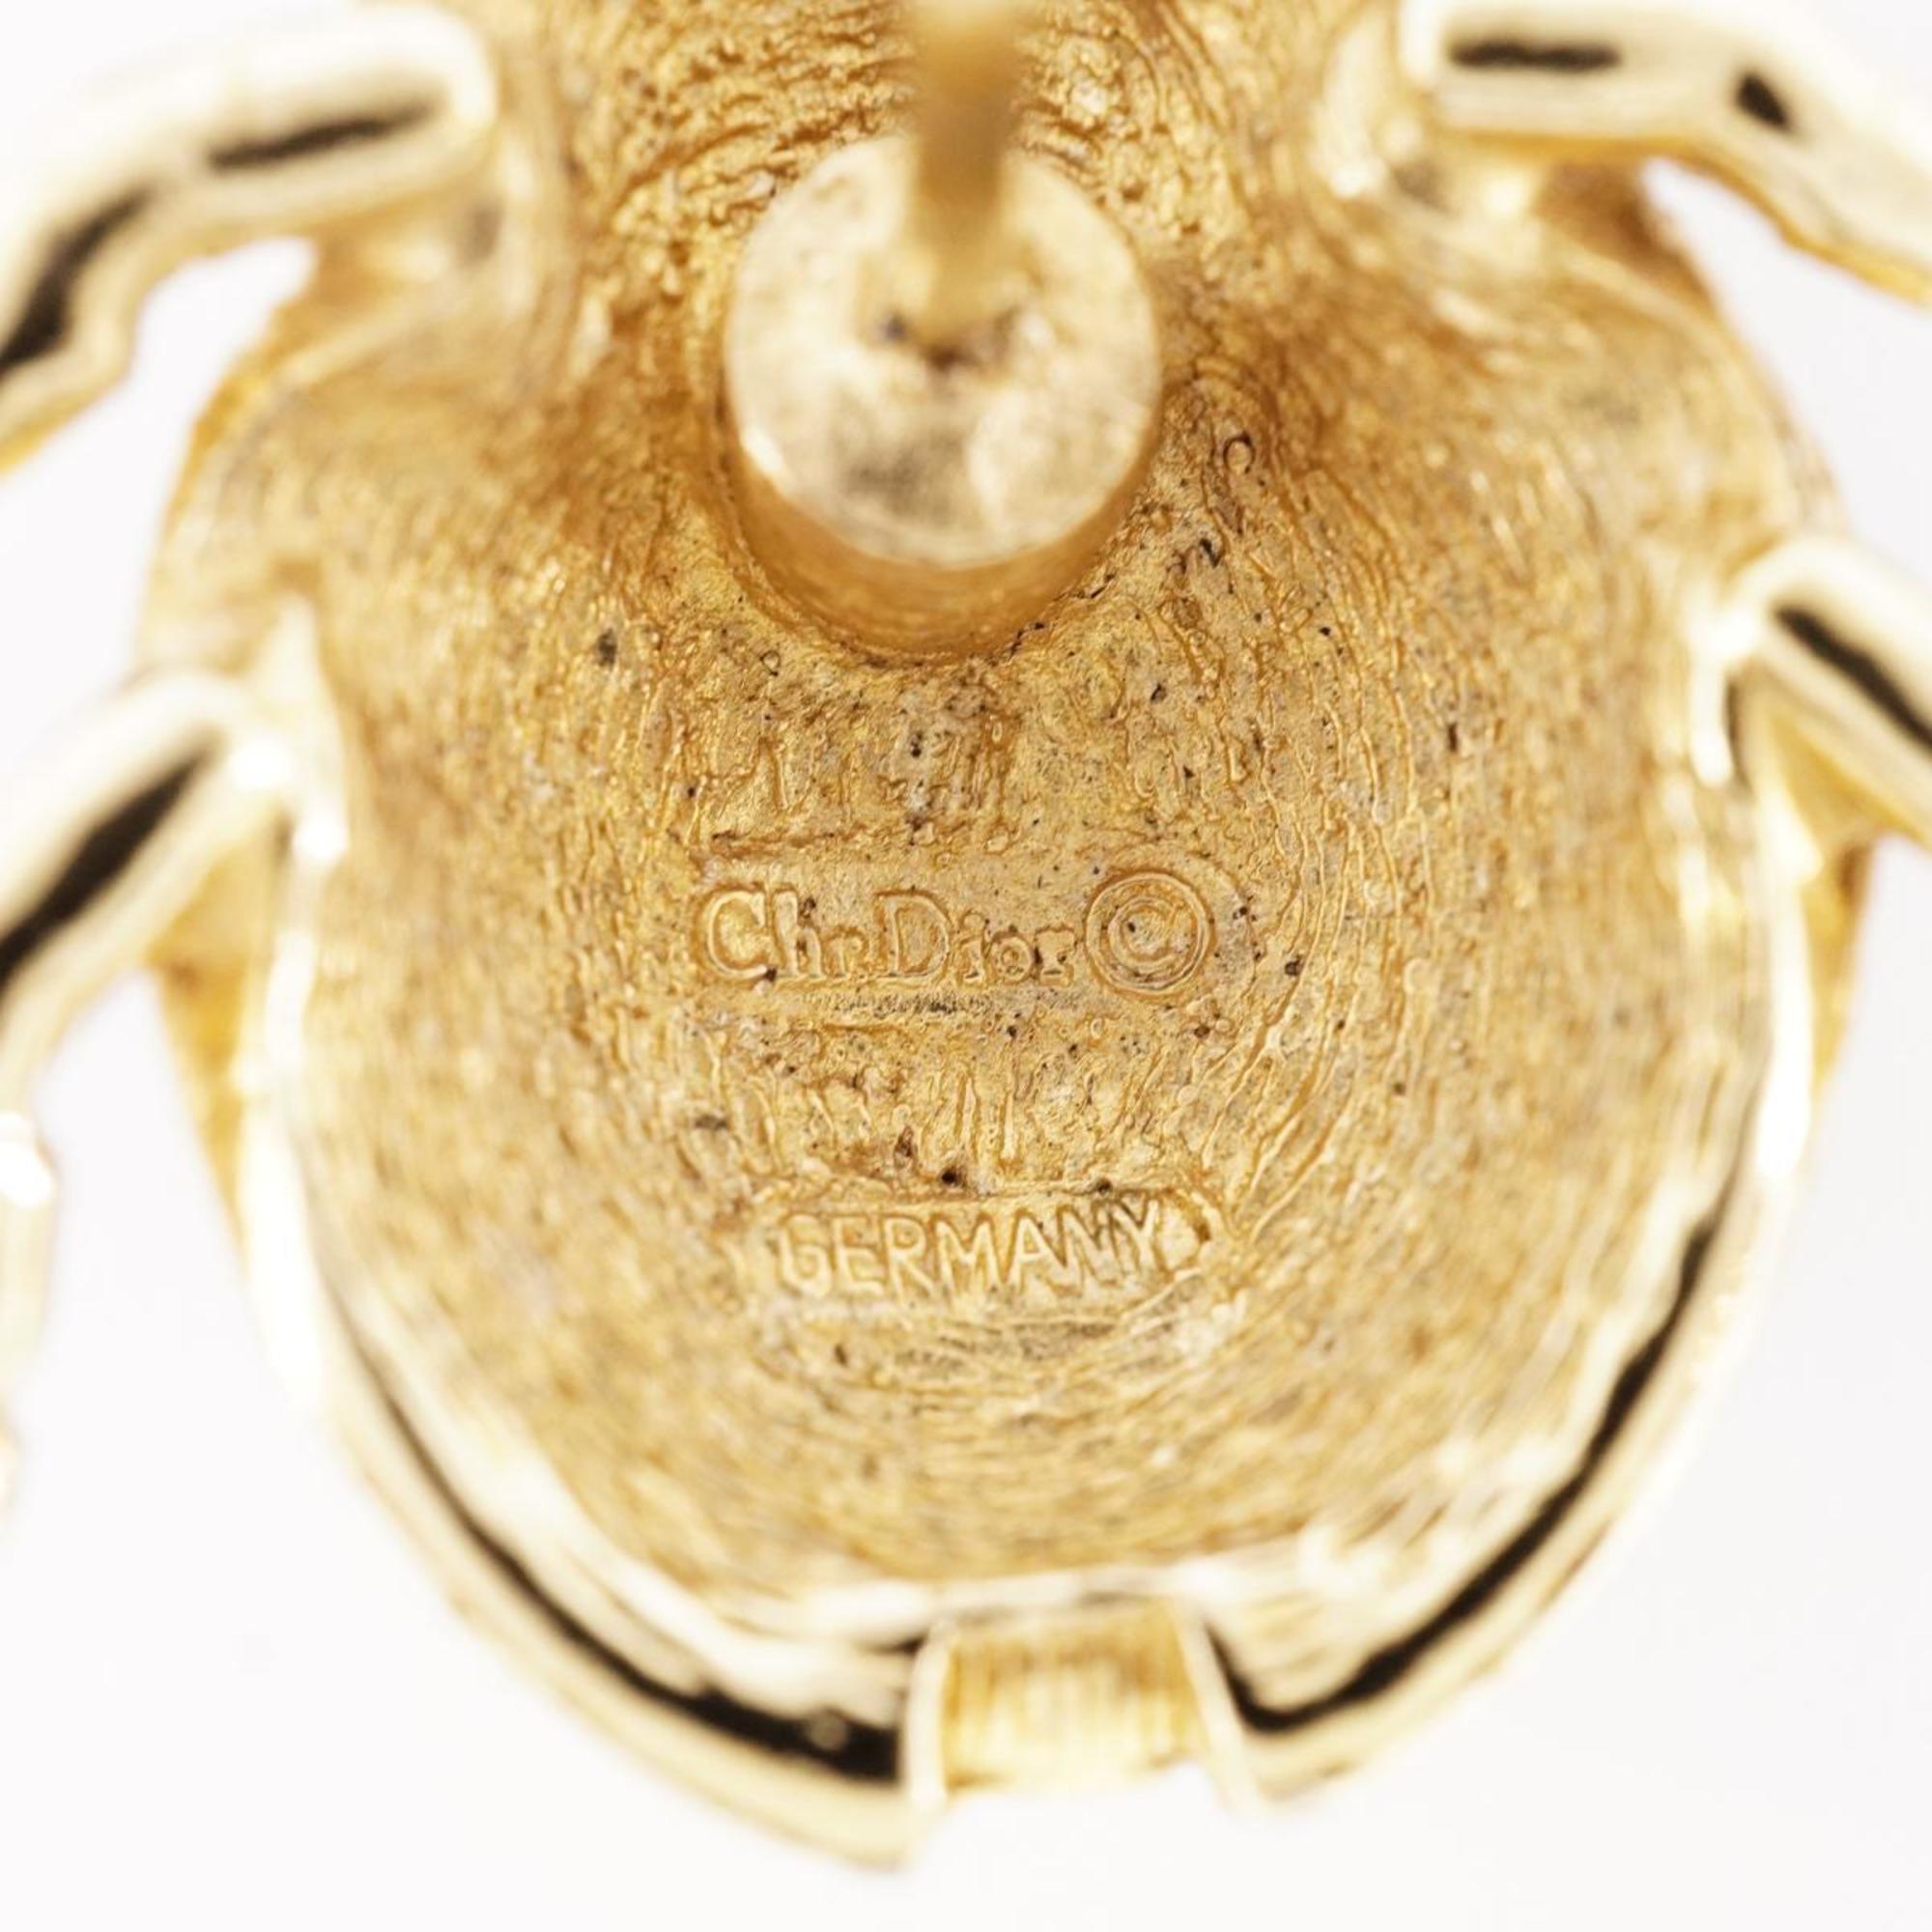 Christian Dior Brooch Ladybug Motif Rhinestone GP Plated Gold Red Women's